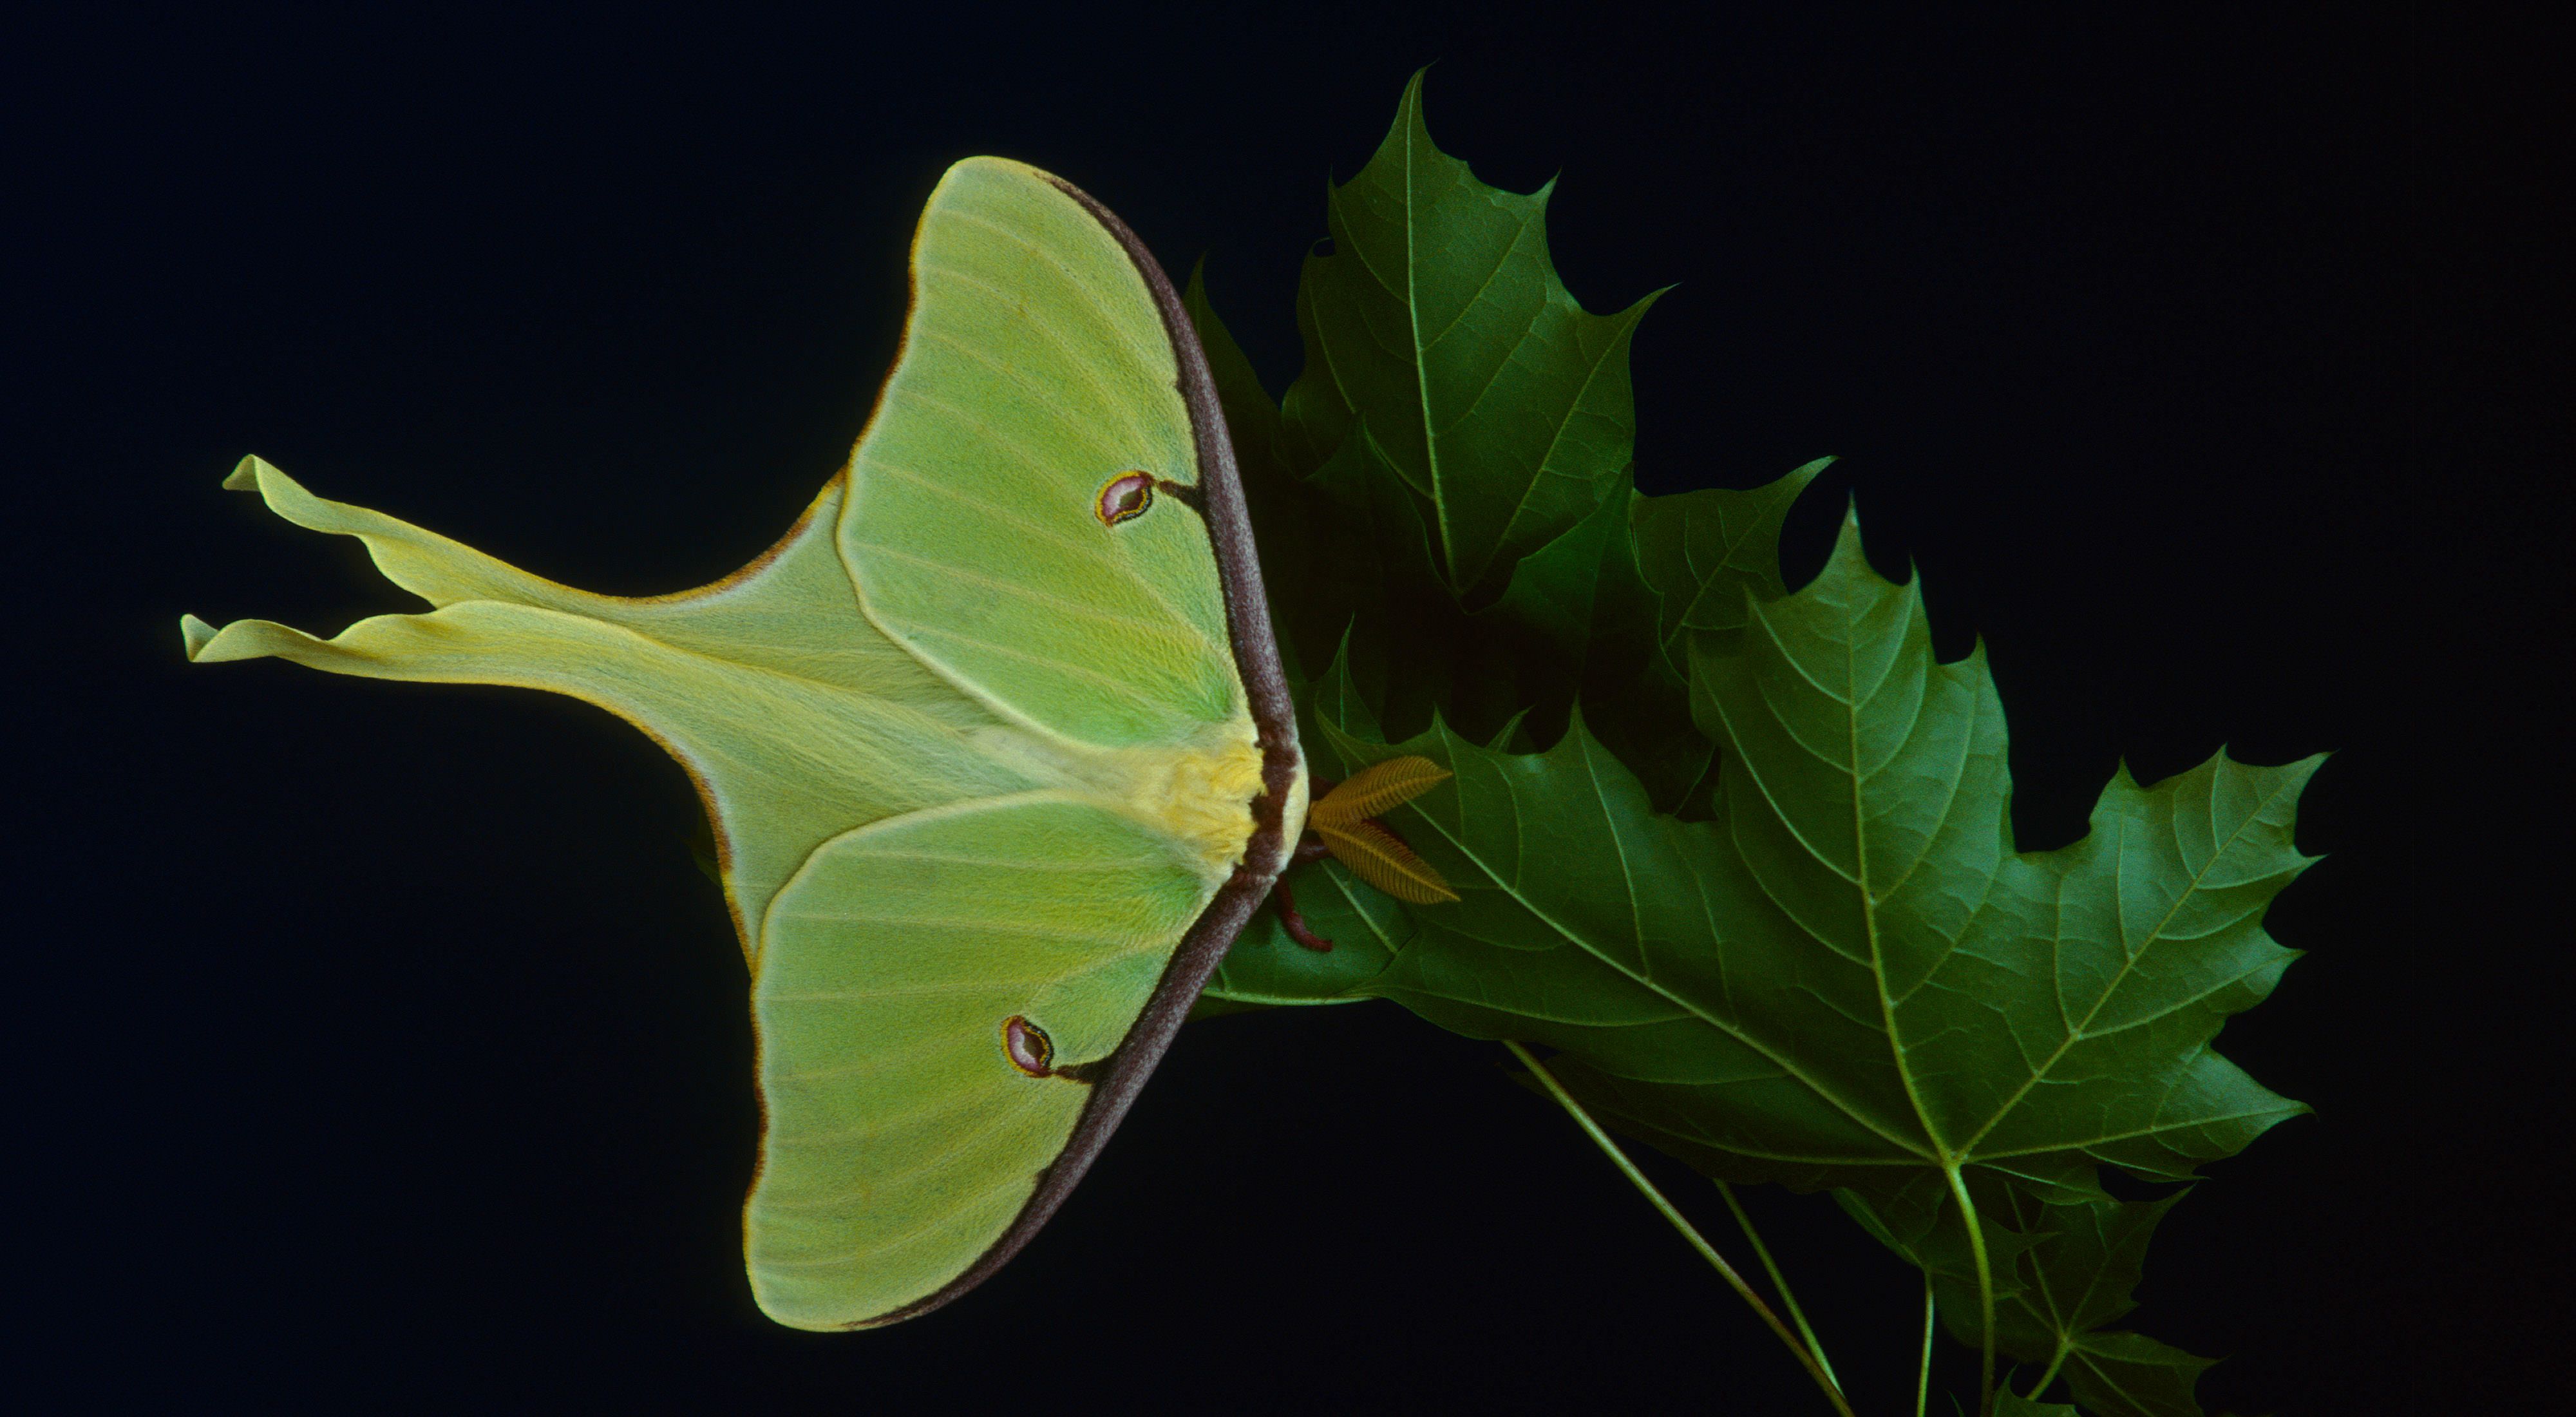 a green moth on a leaf against a black background